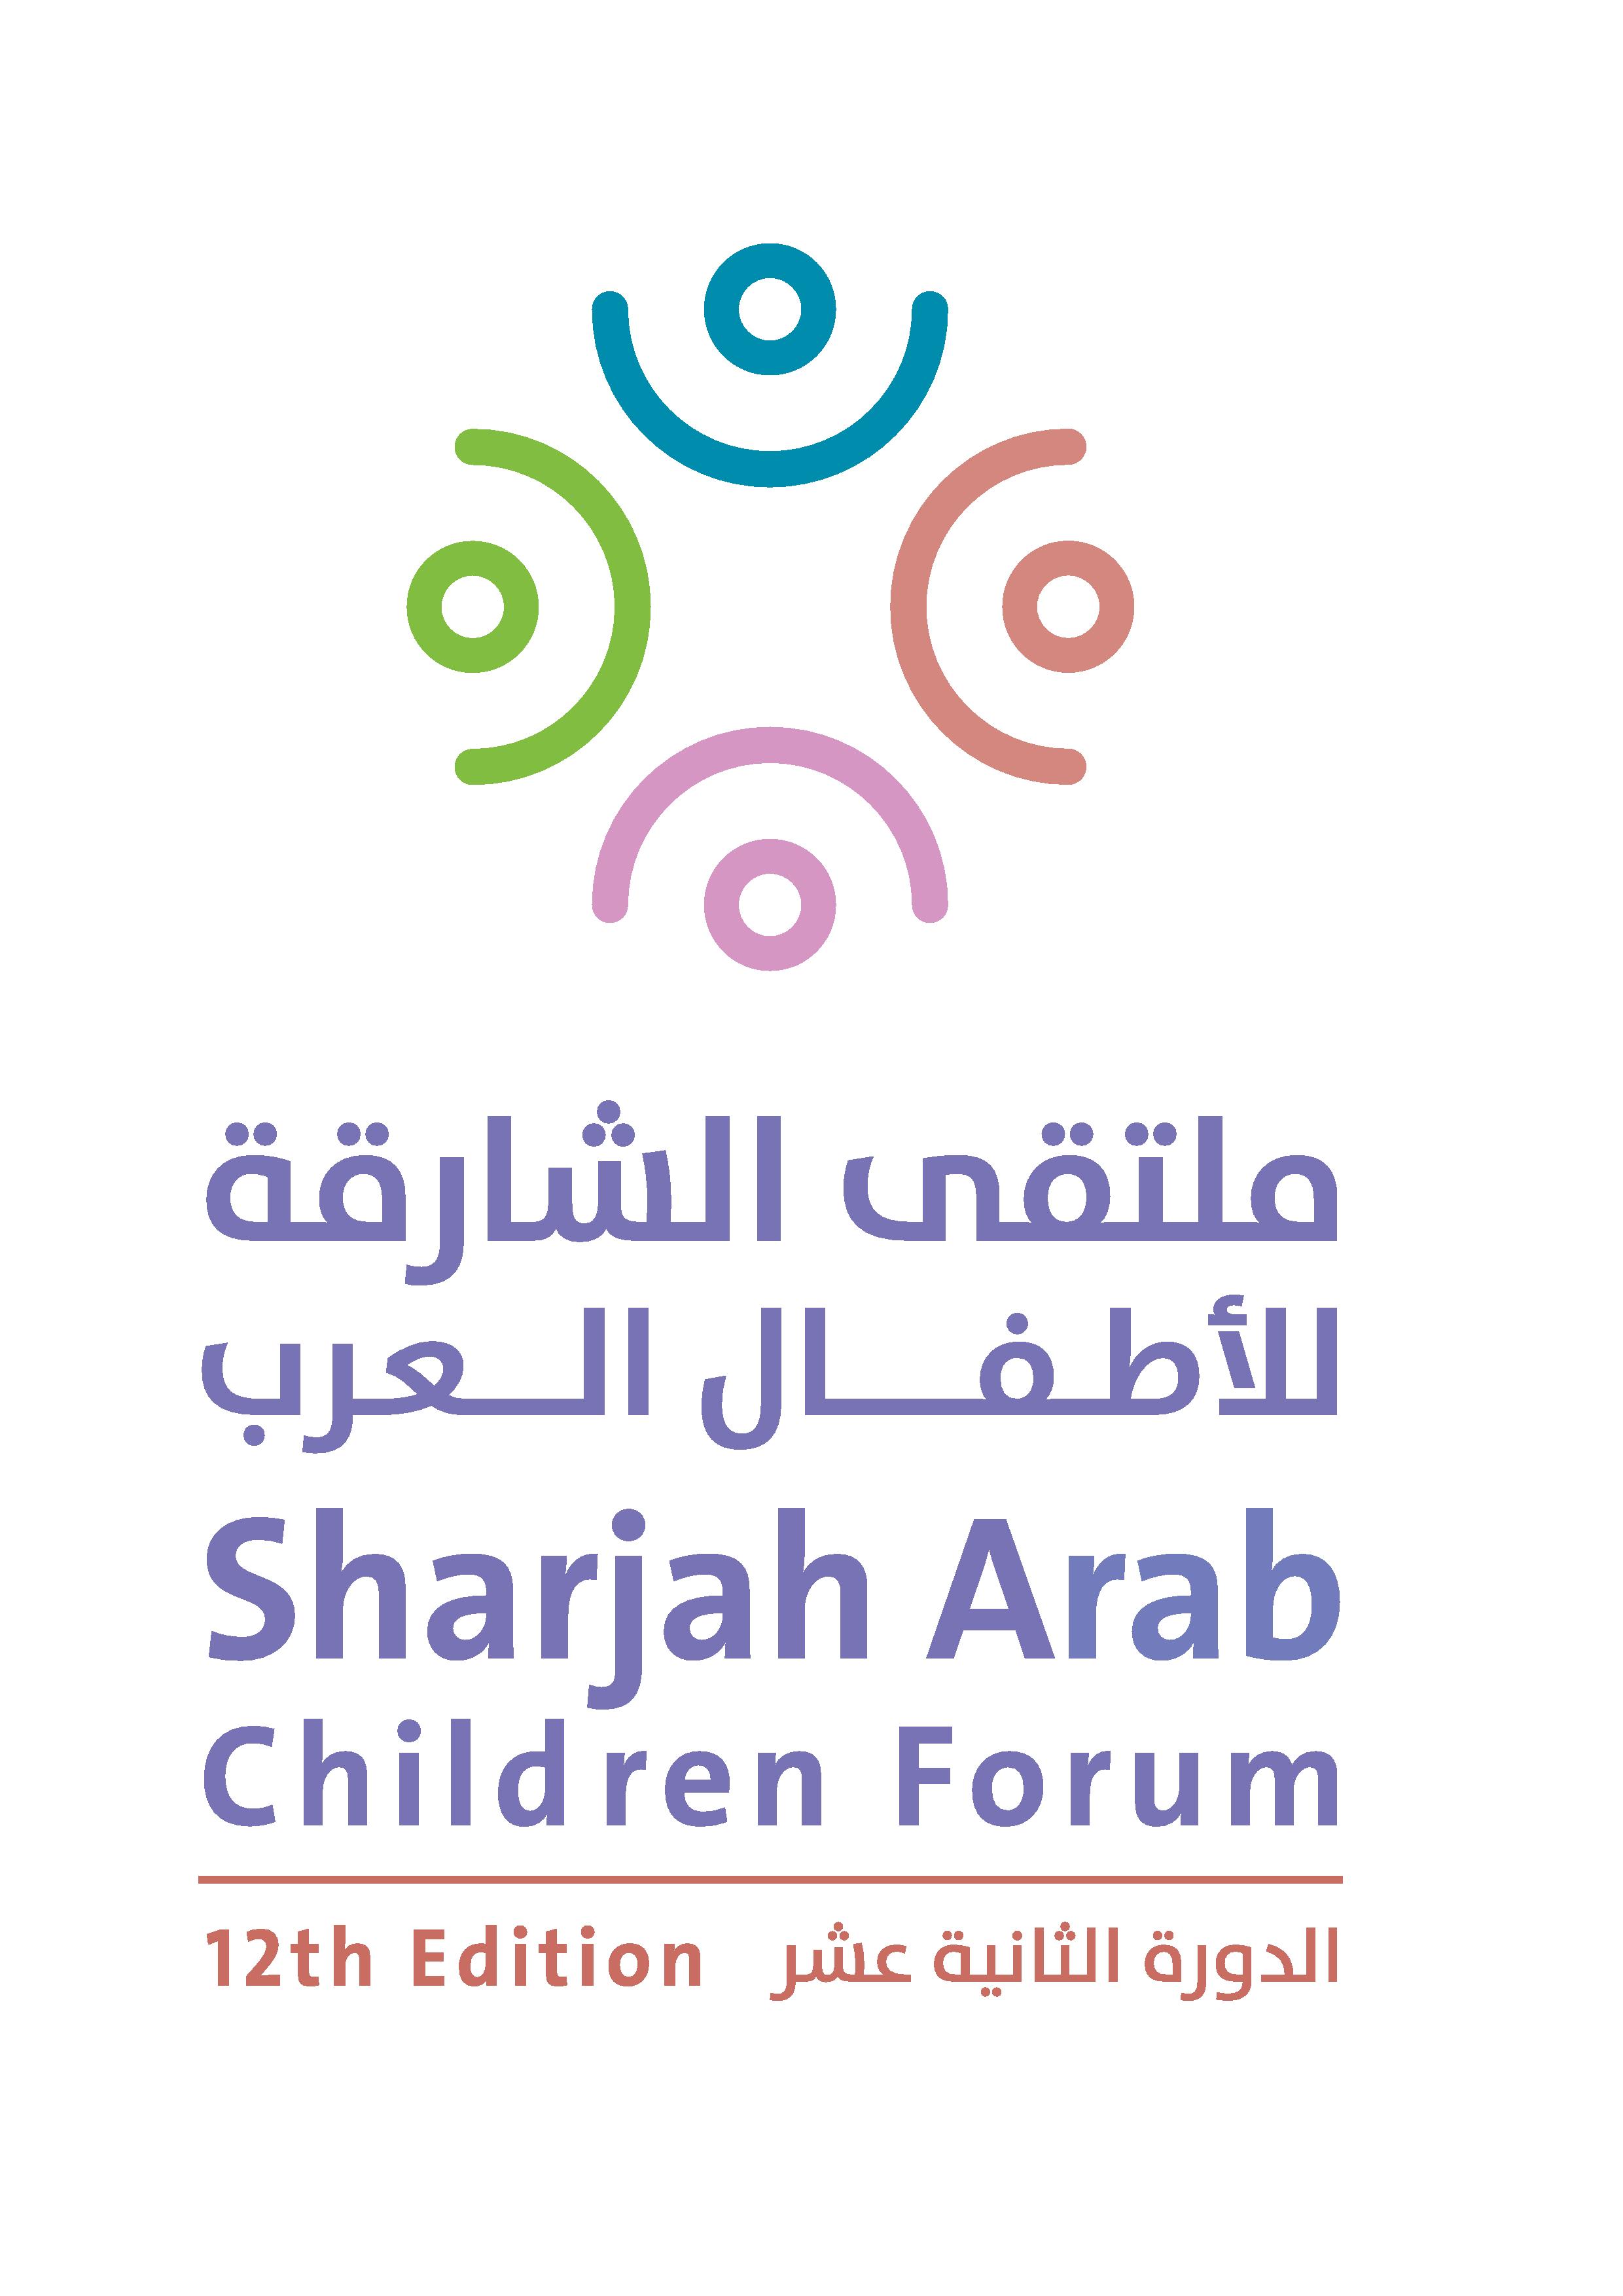 	Sharjah Arab Children Forum Registration Opens